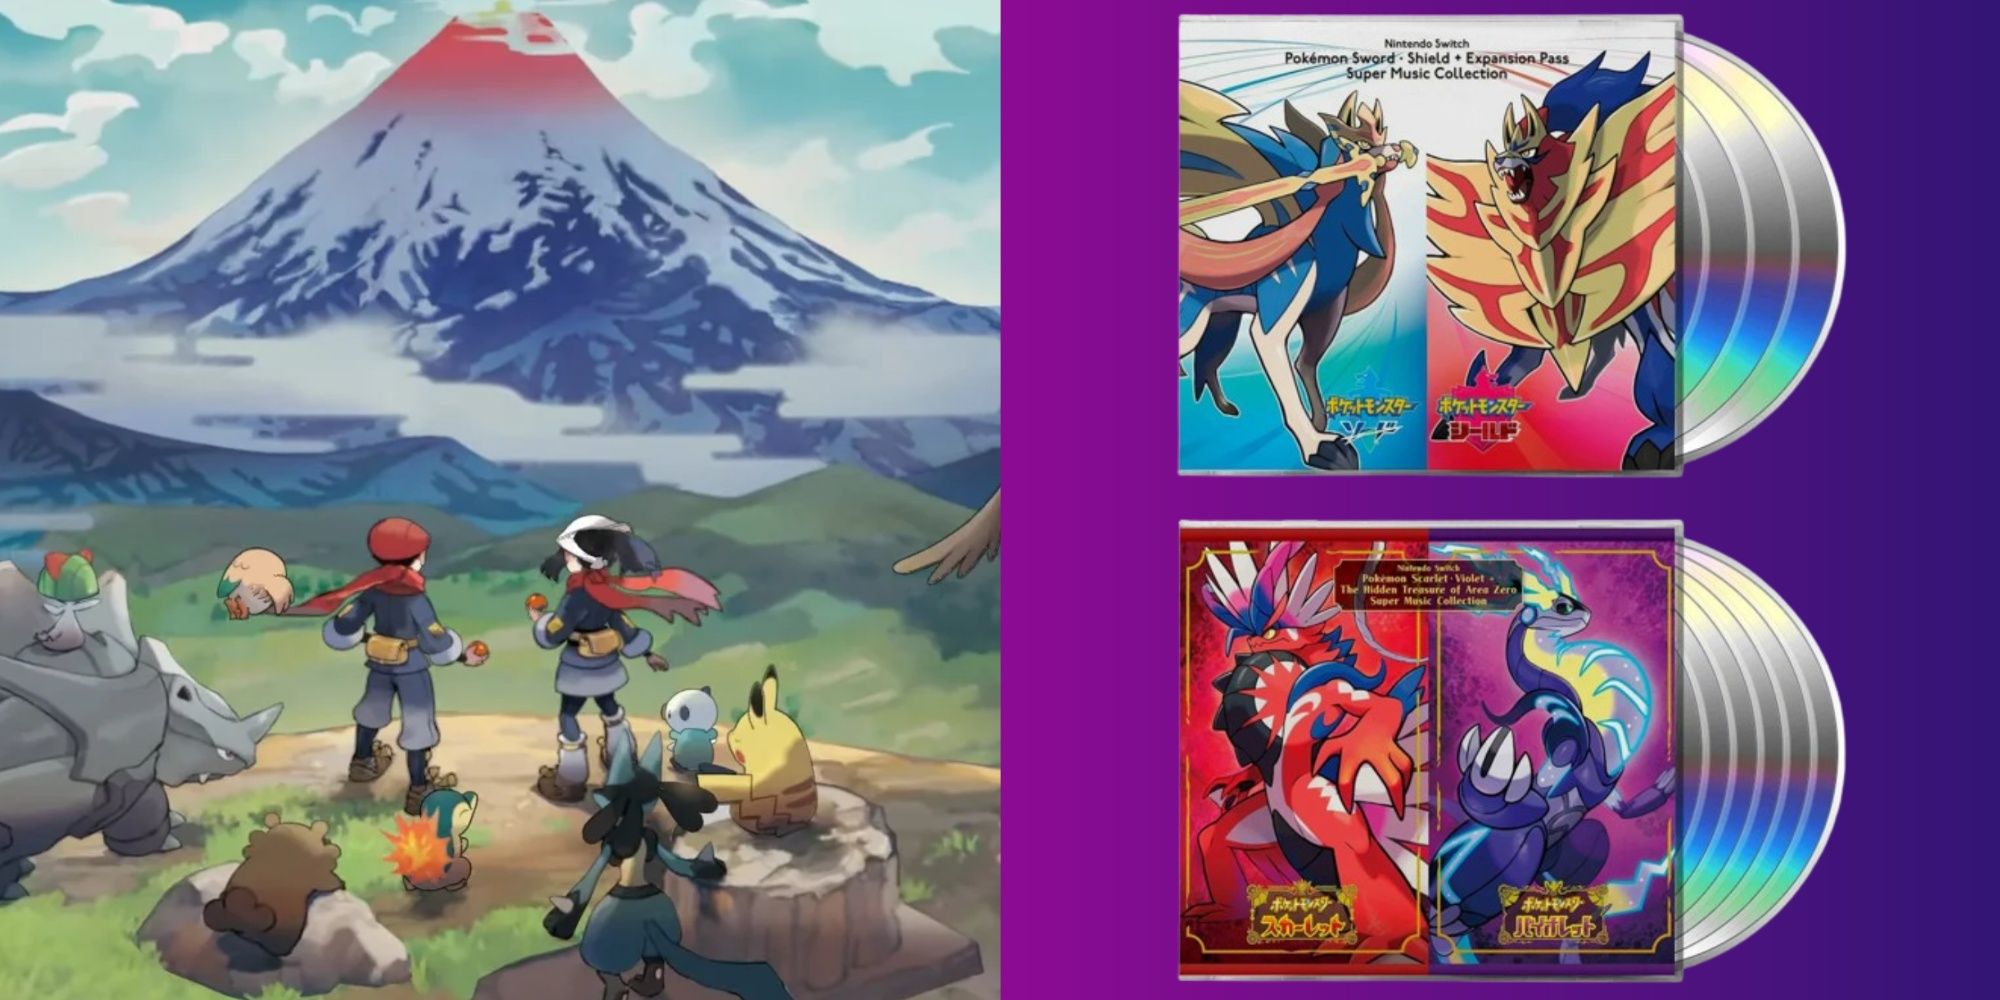 pokemon legends arceus, and sword & shield and scarlet & violet super music collection soundtracks